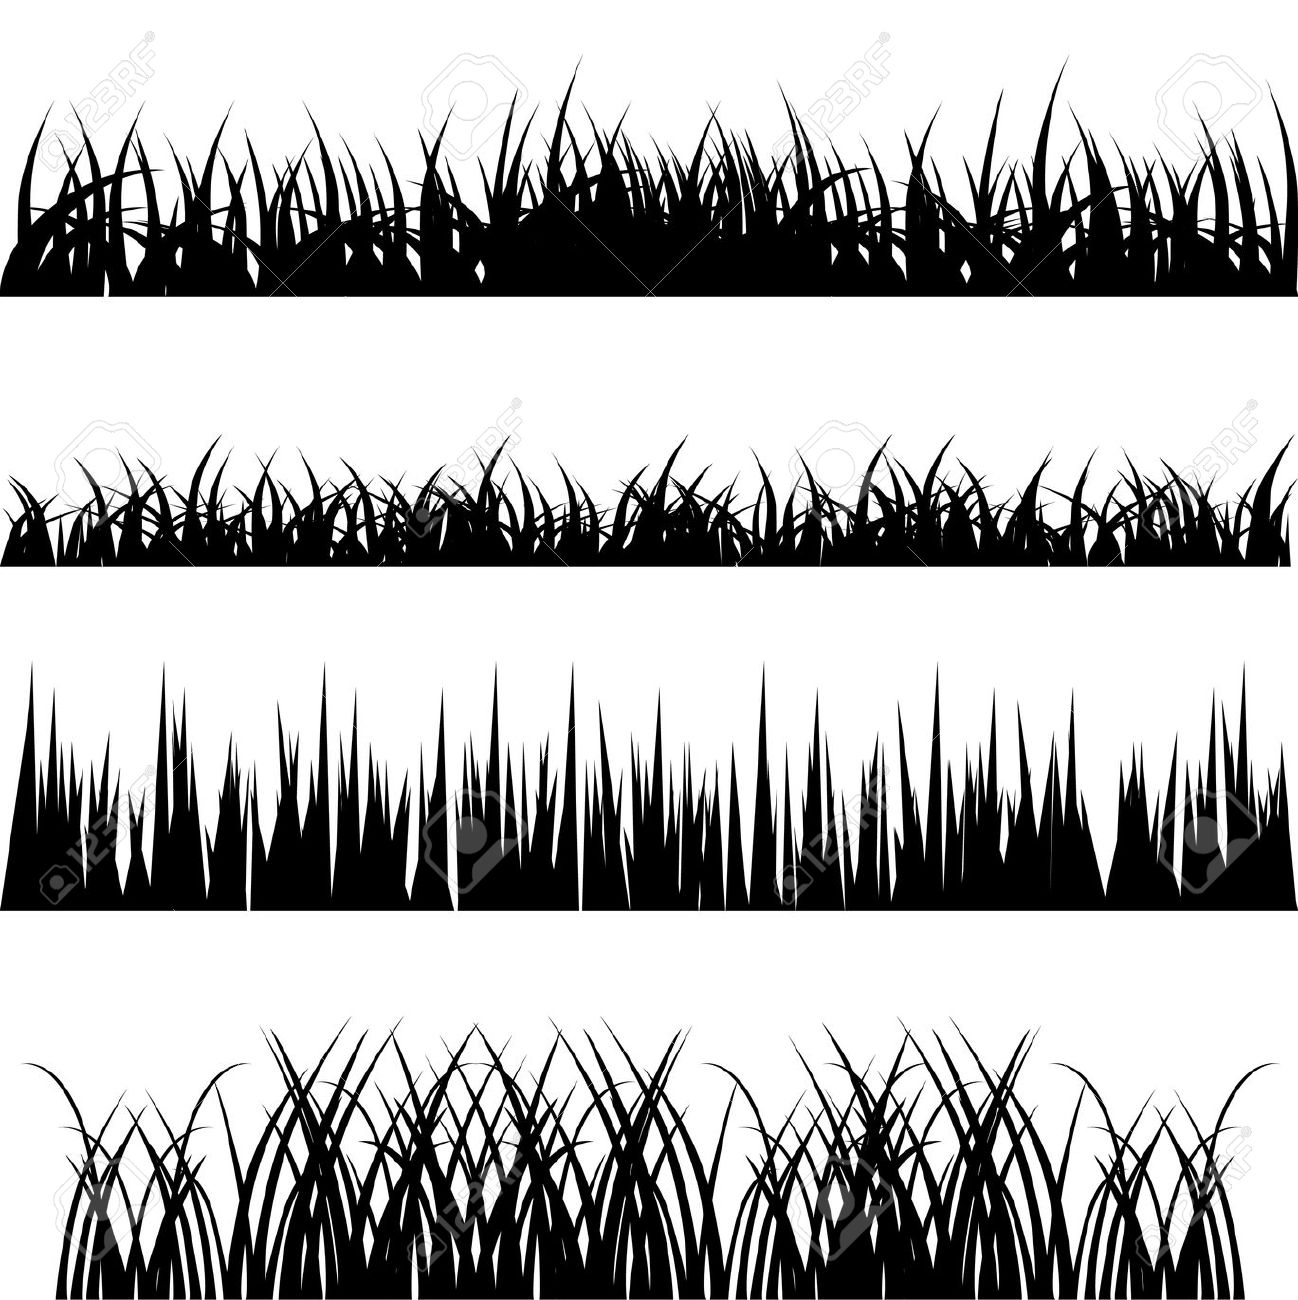 Grass clipart silhouette